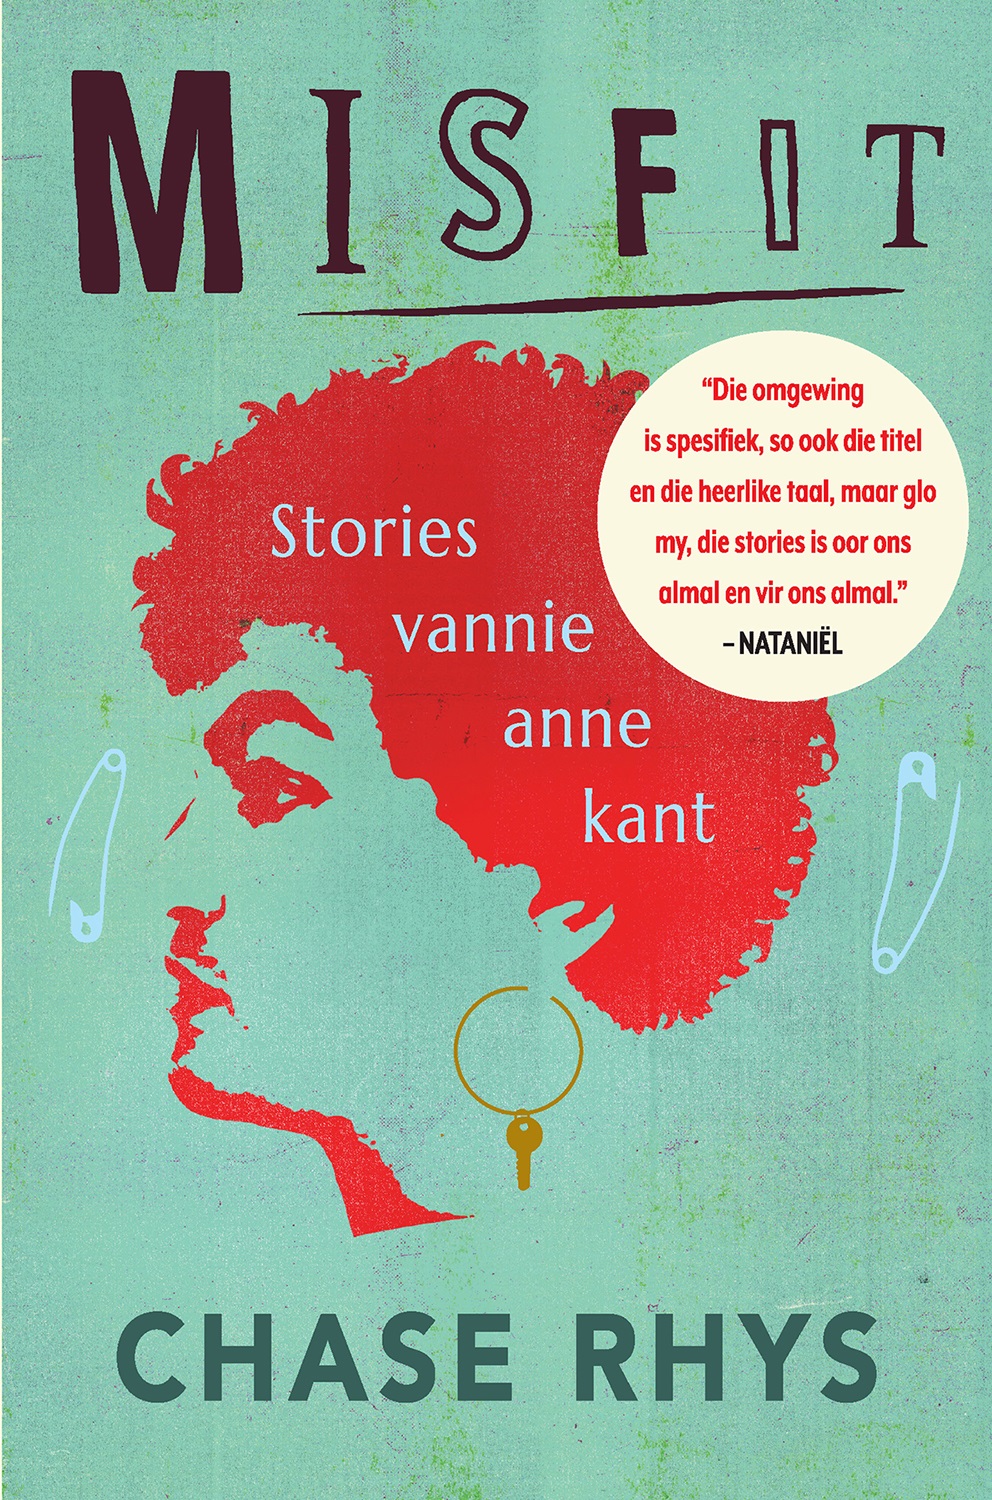 Misfit: Stories vannie Anne Kant by Chase Rhys. (Kwela)